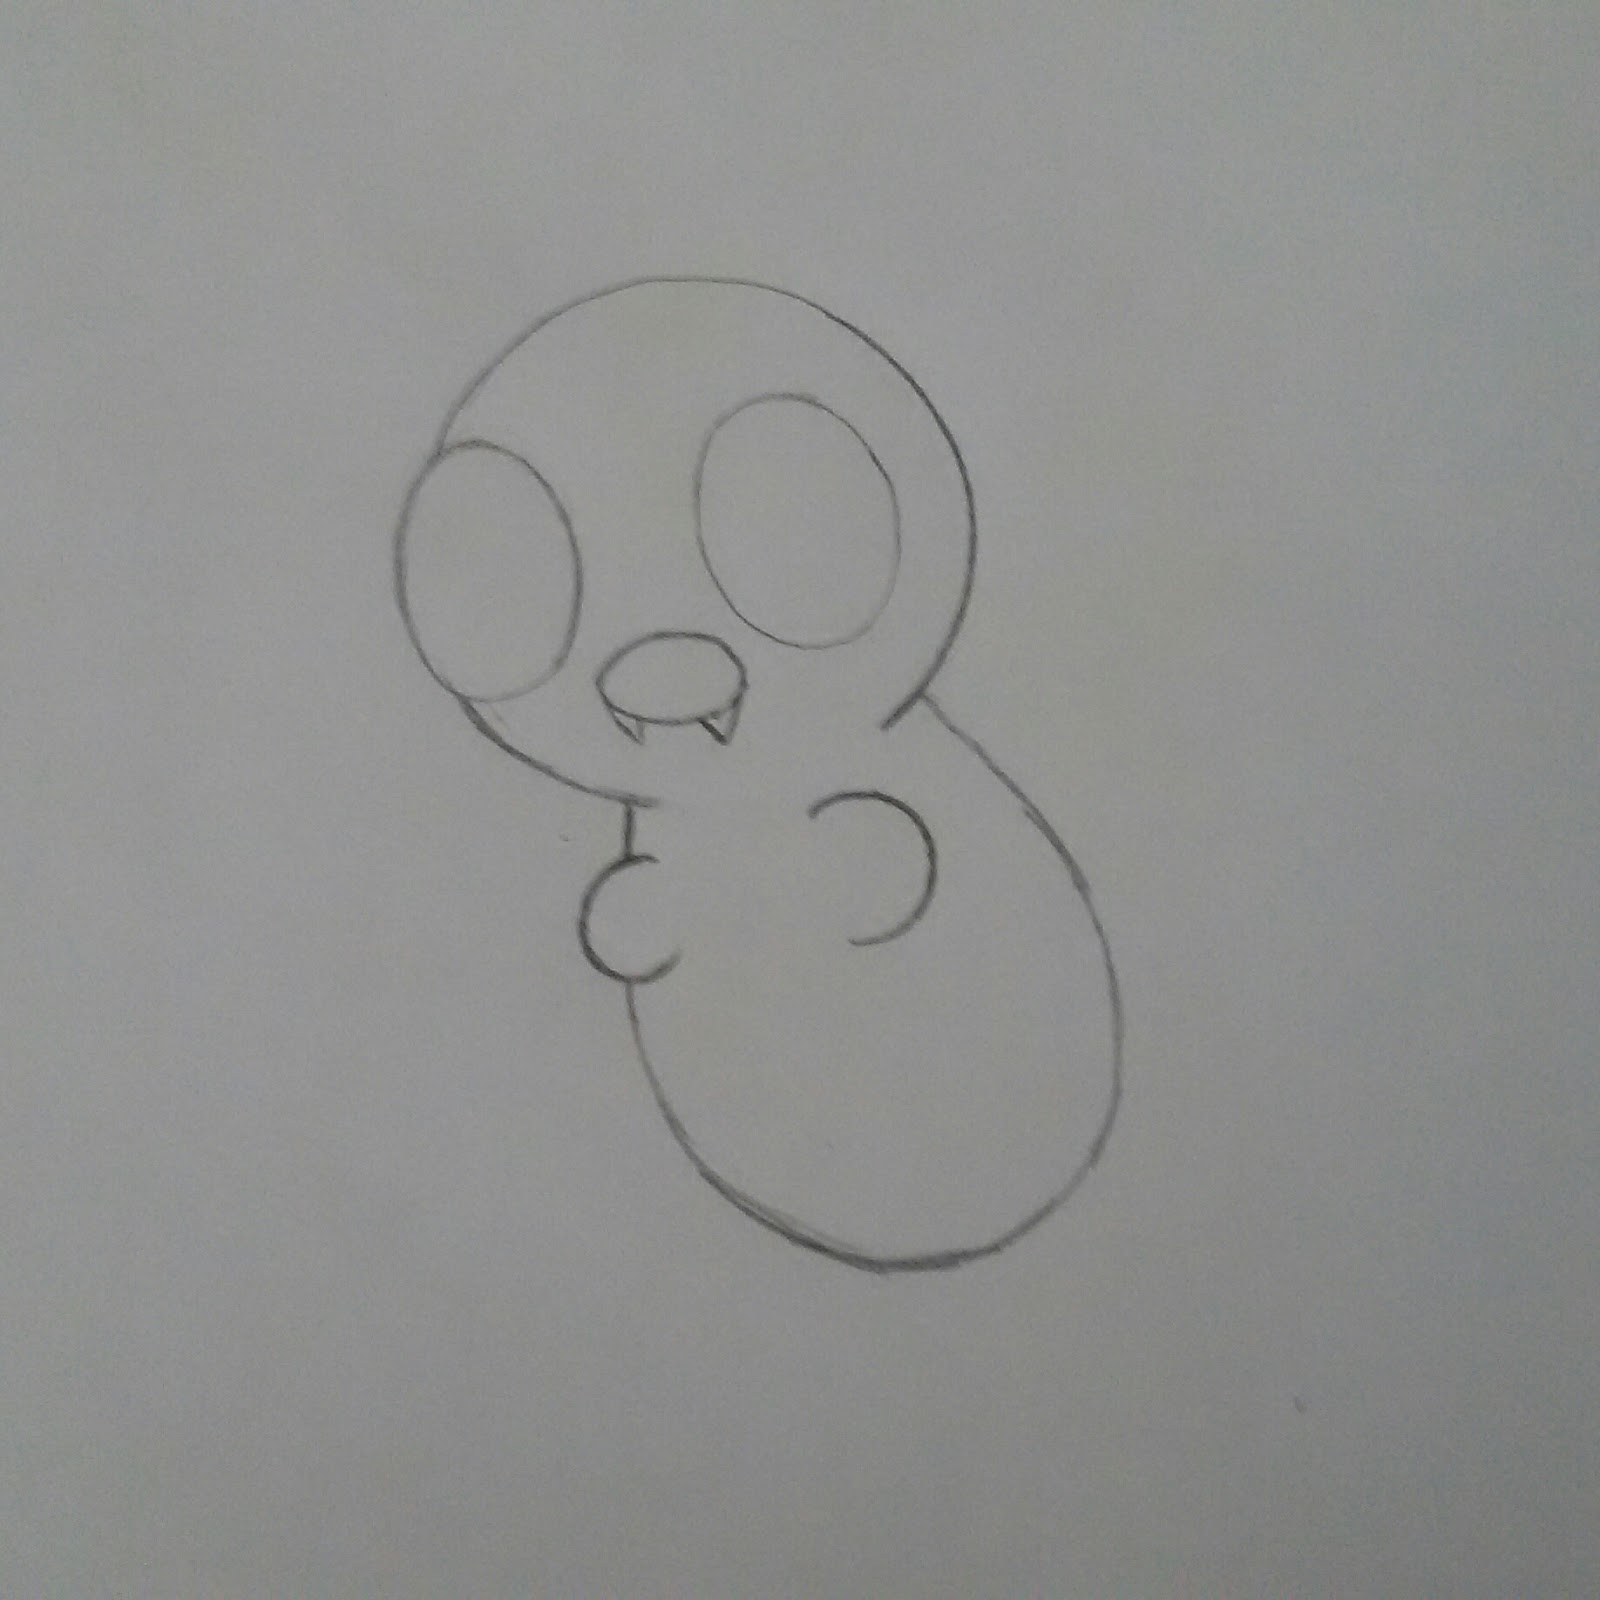 Desenhos de Pokemon Caterpie - Como desenhar Pokemon Caterpie passo a passo